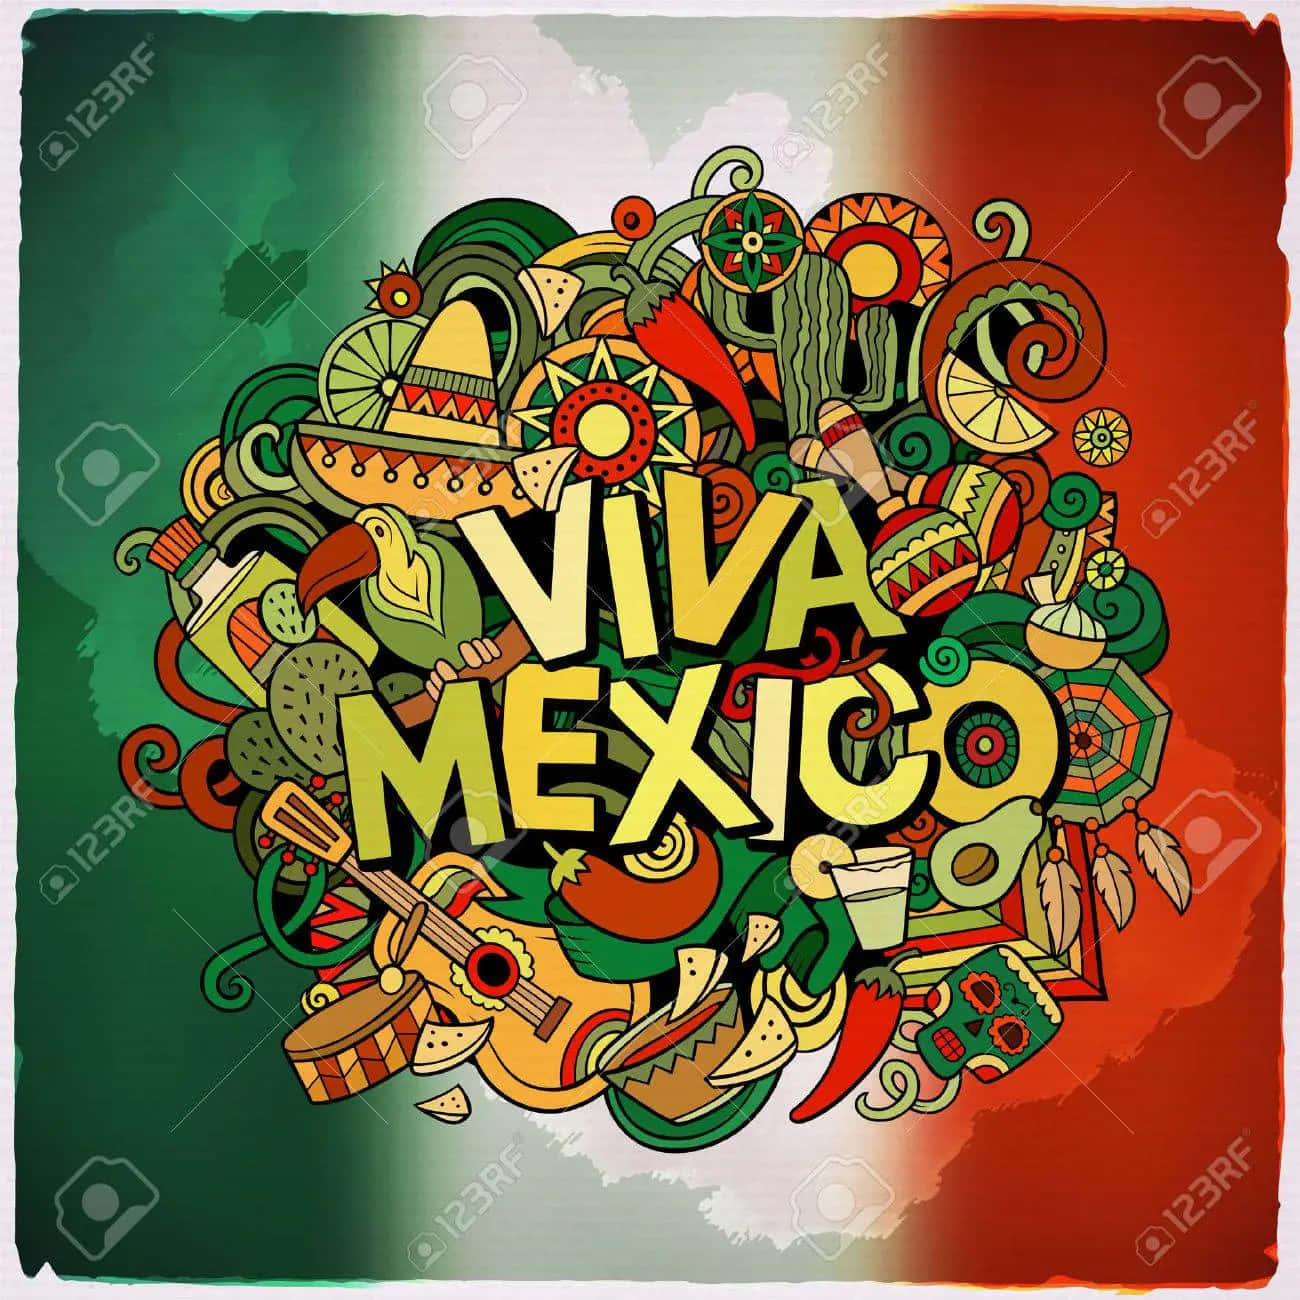 Celebrate Viva Mexico!